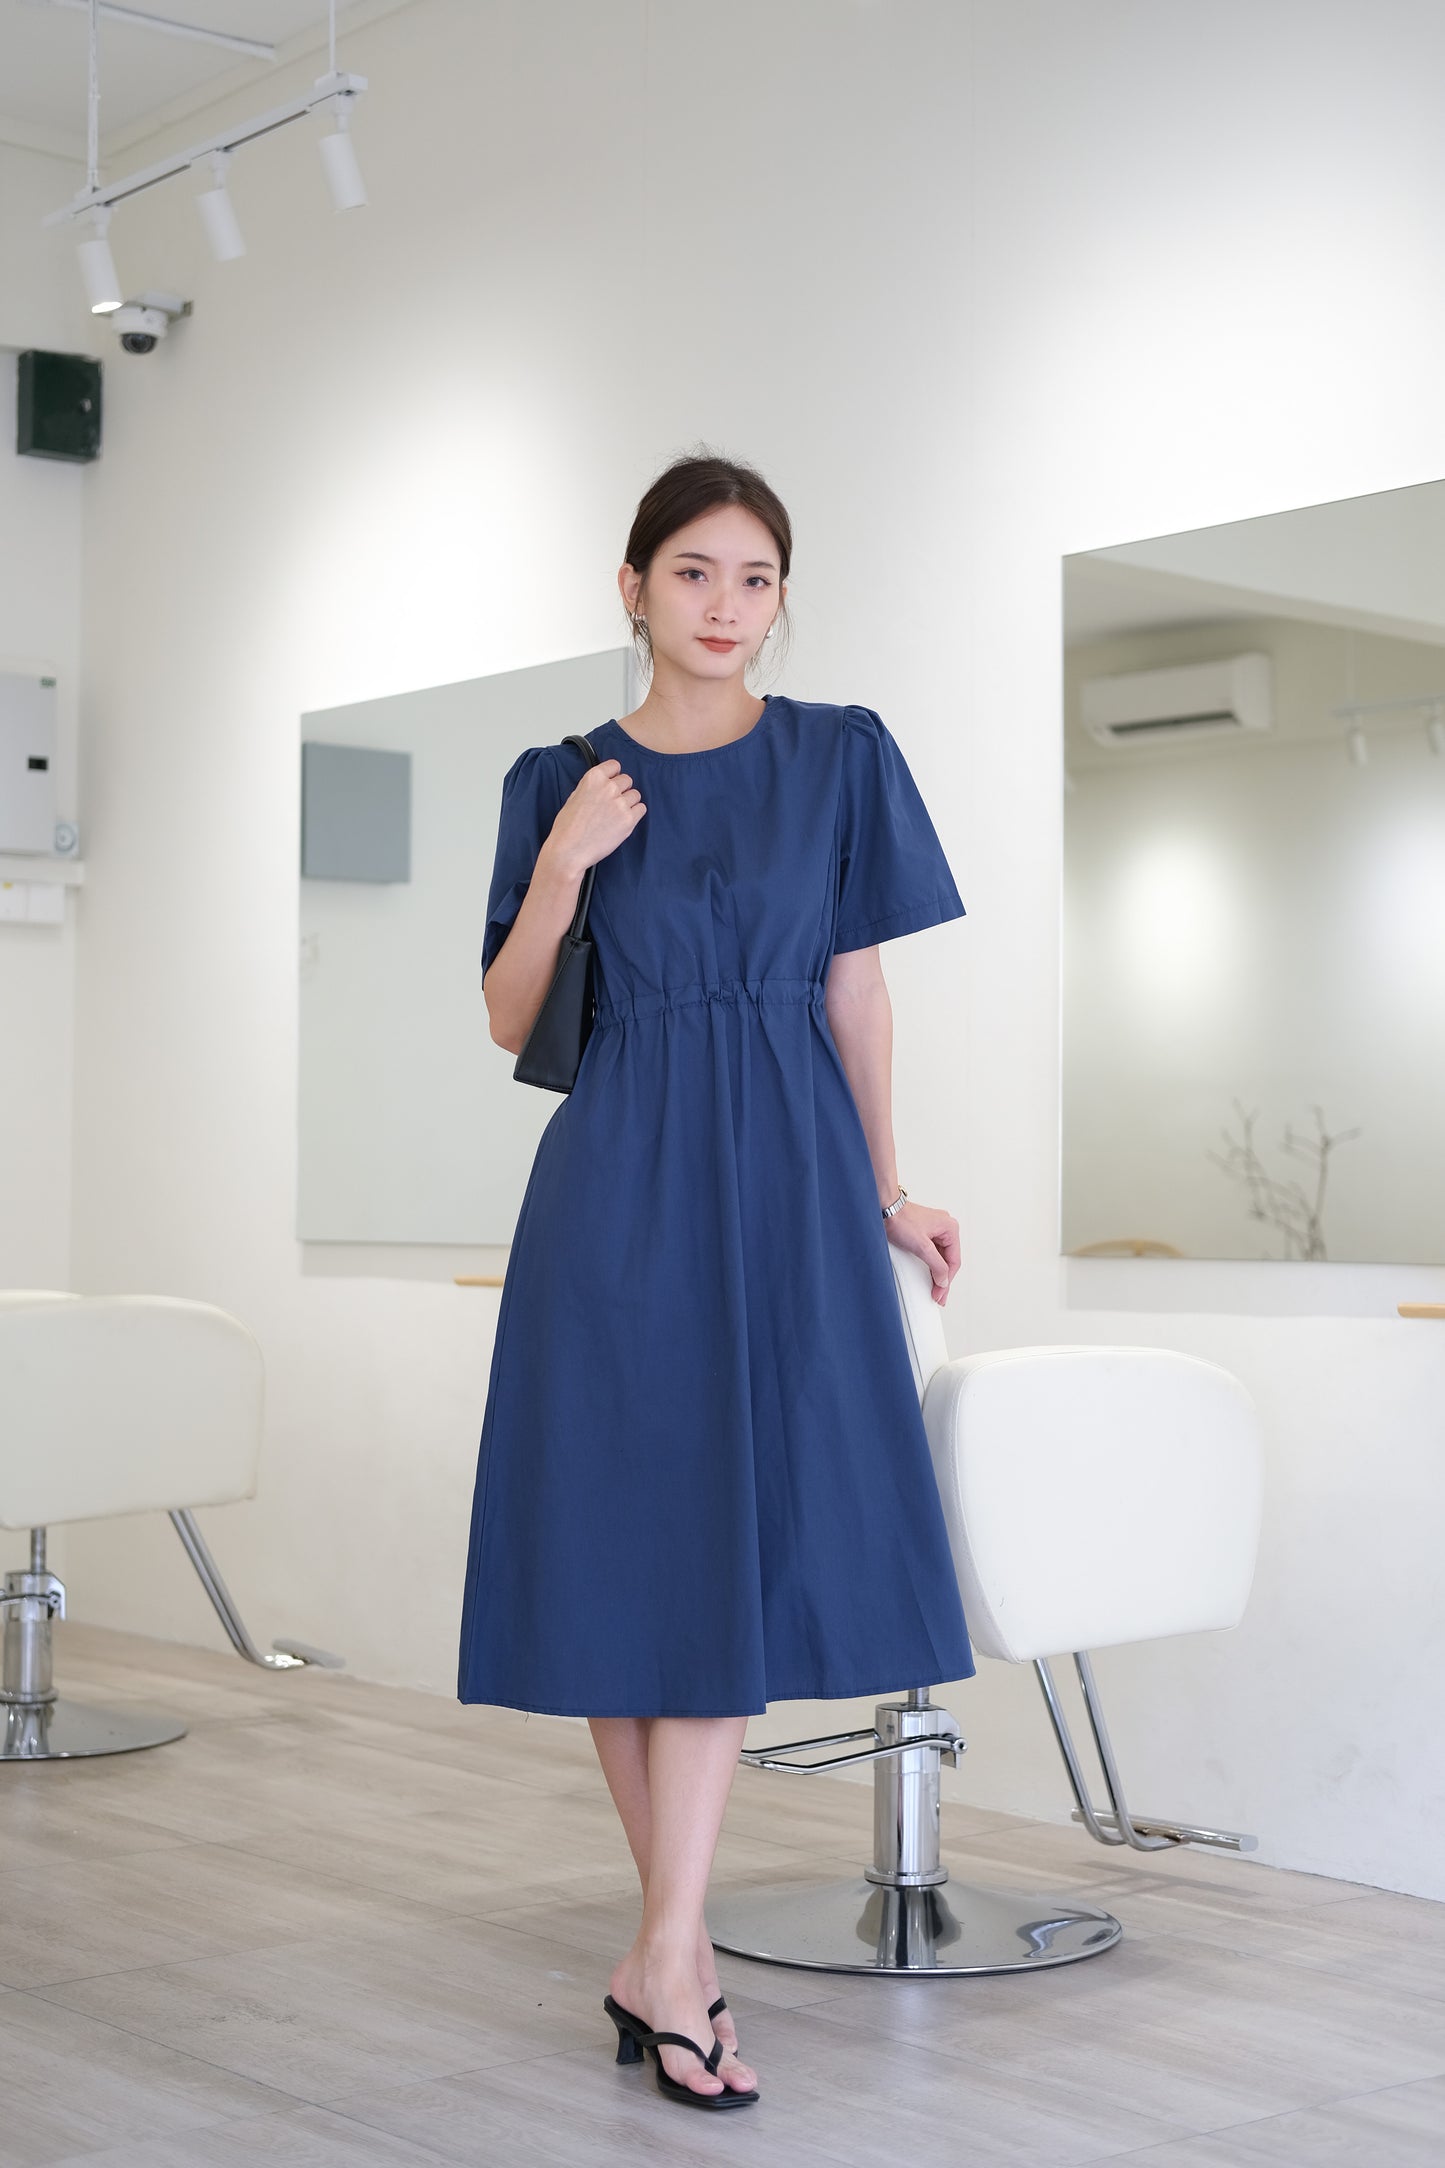 Round neck backless short sleeve A-line dress in dark blue